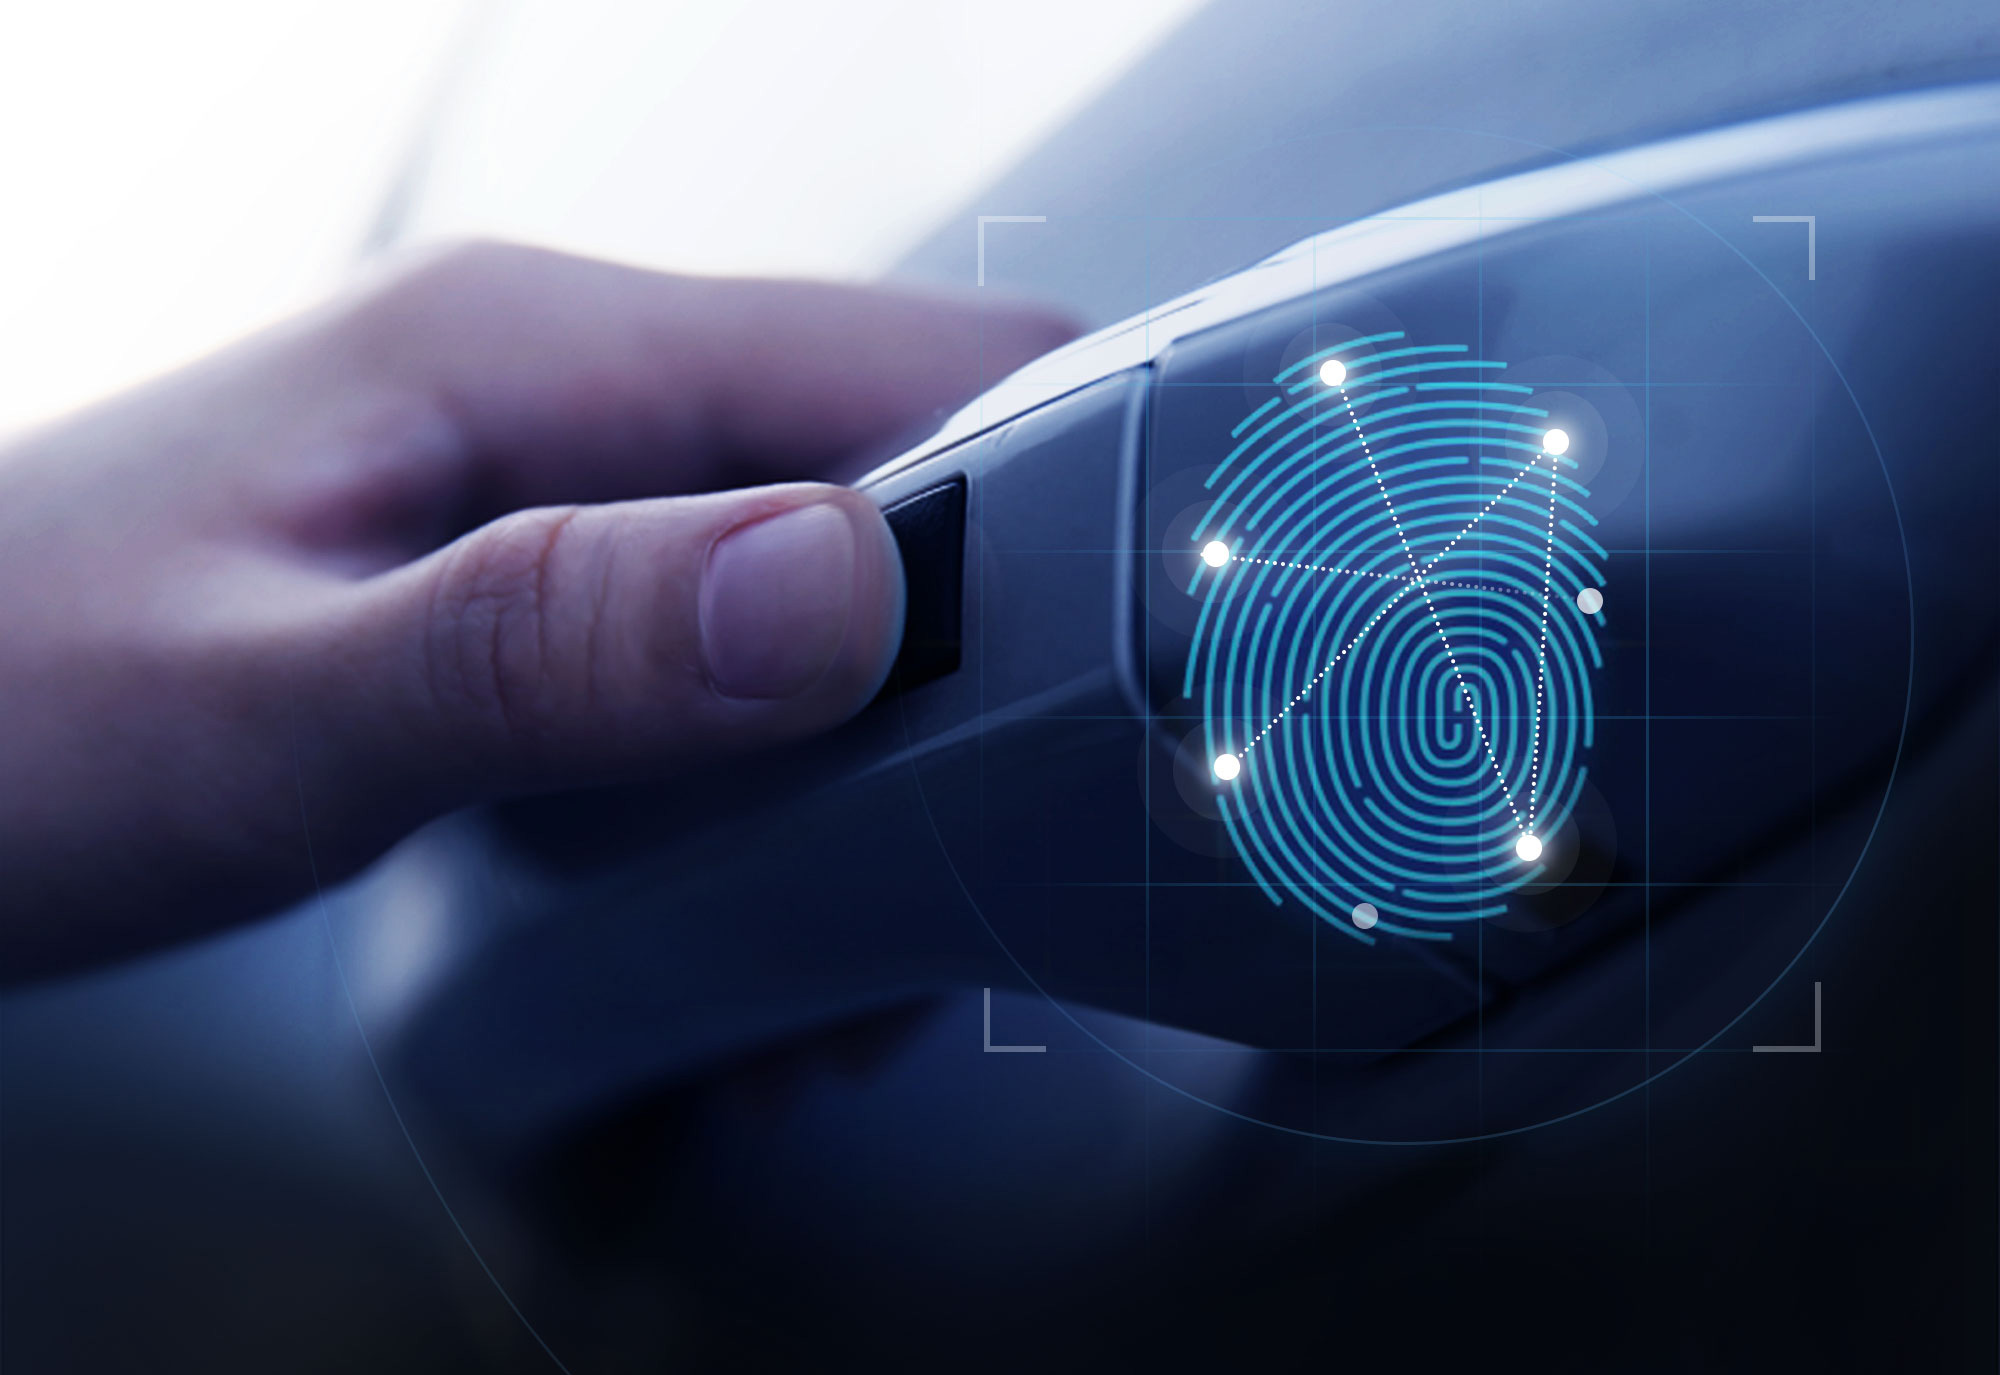 Hyundai-Fingerprint-technology_press-photo1.jpg